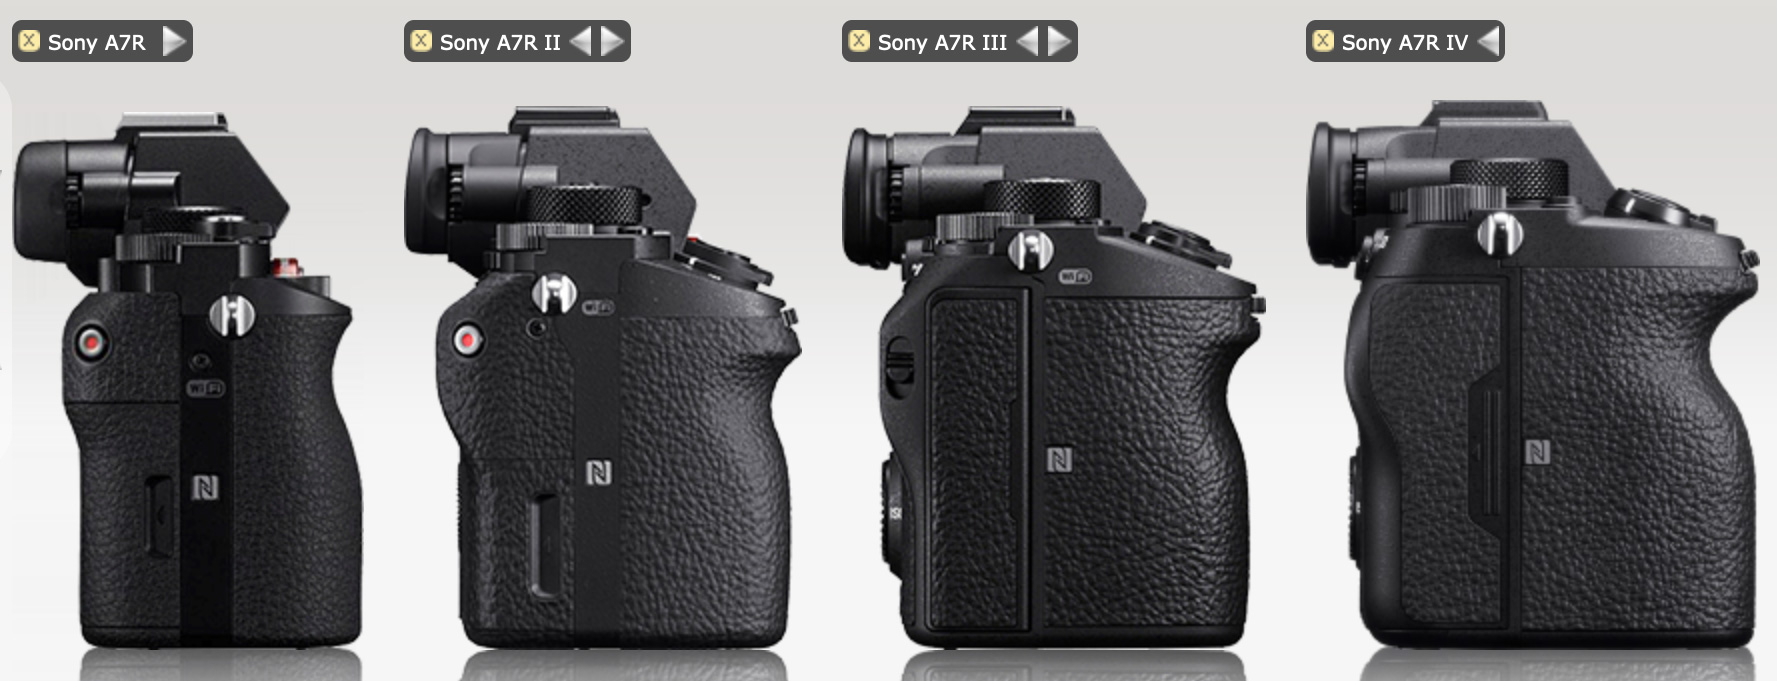 SONY a7R IV vs SONY a7R III Which Camera SHOULD You BUY? 